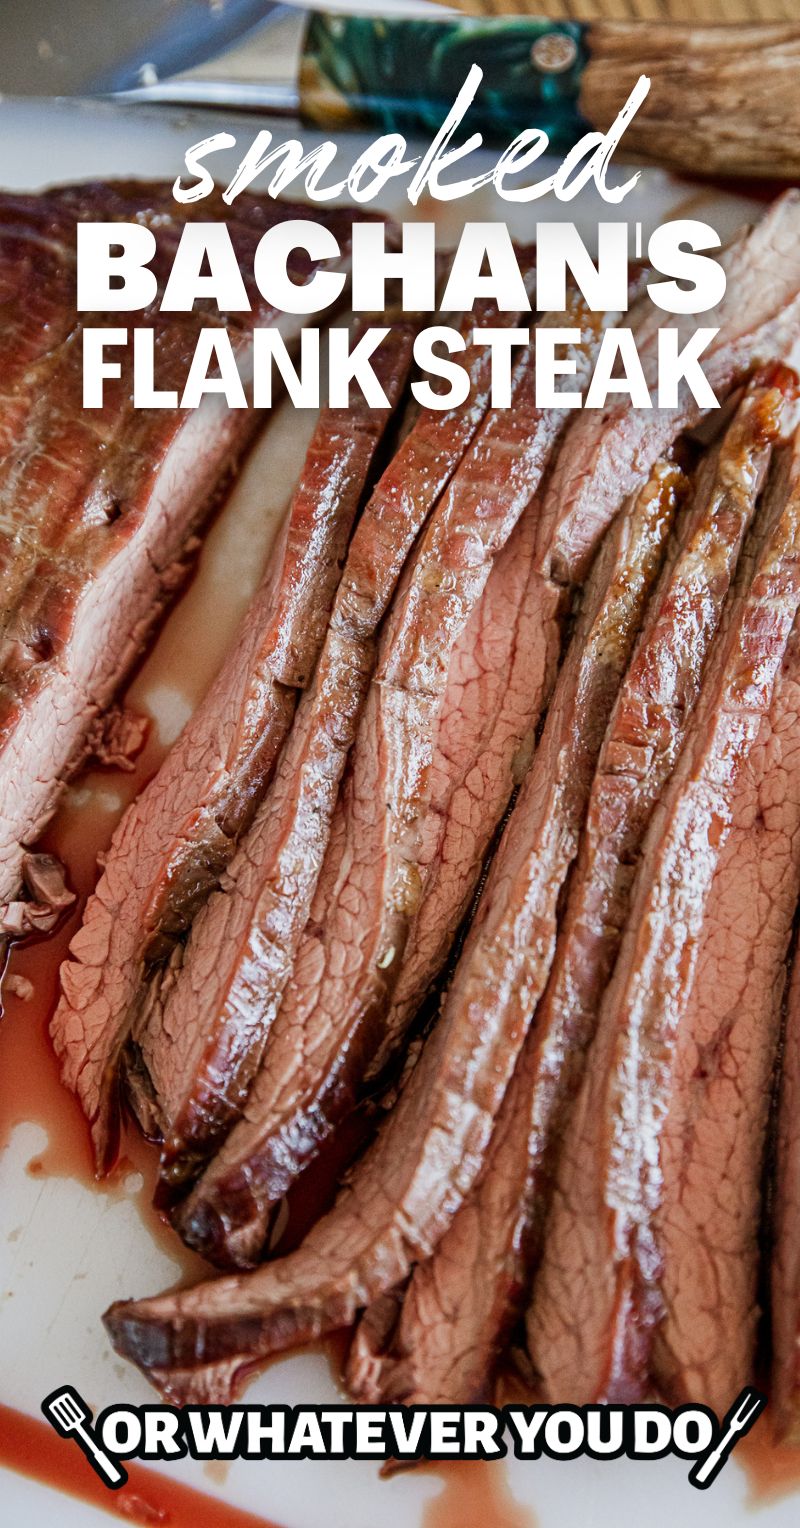 Smoked Bachan's Flank Steak